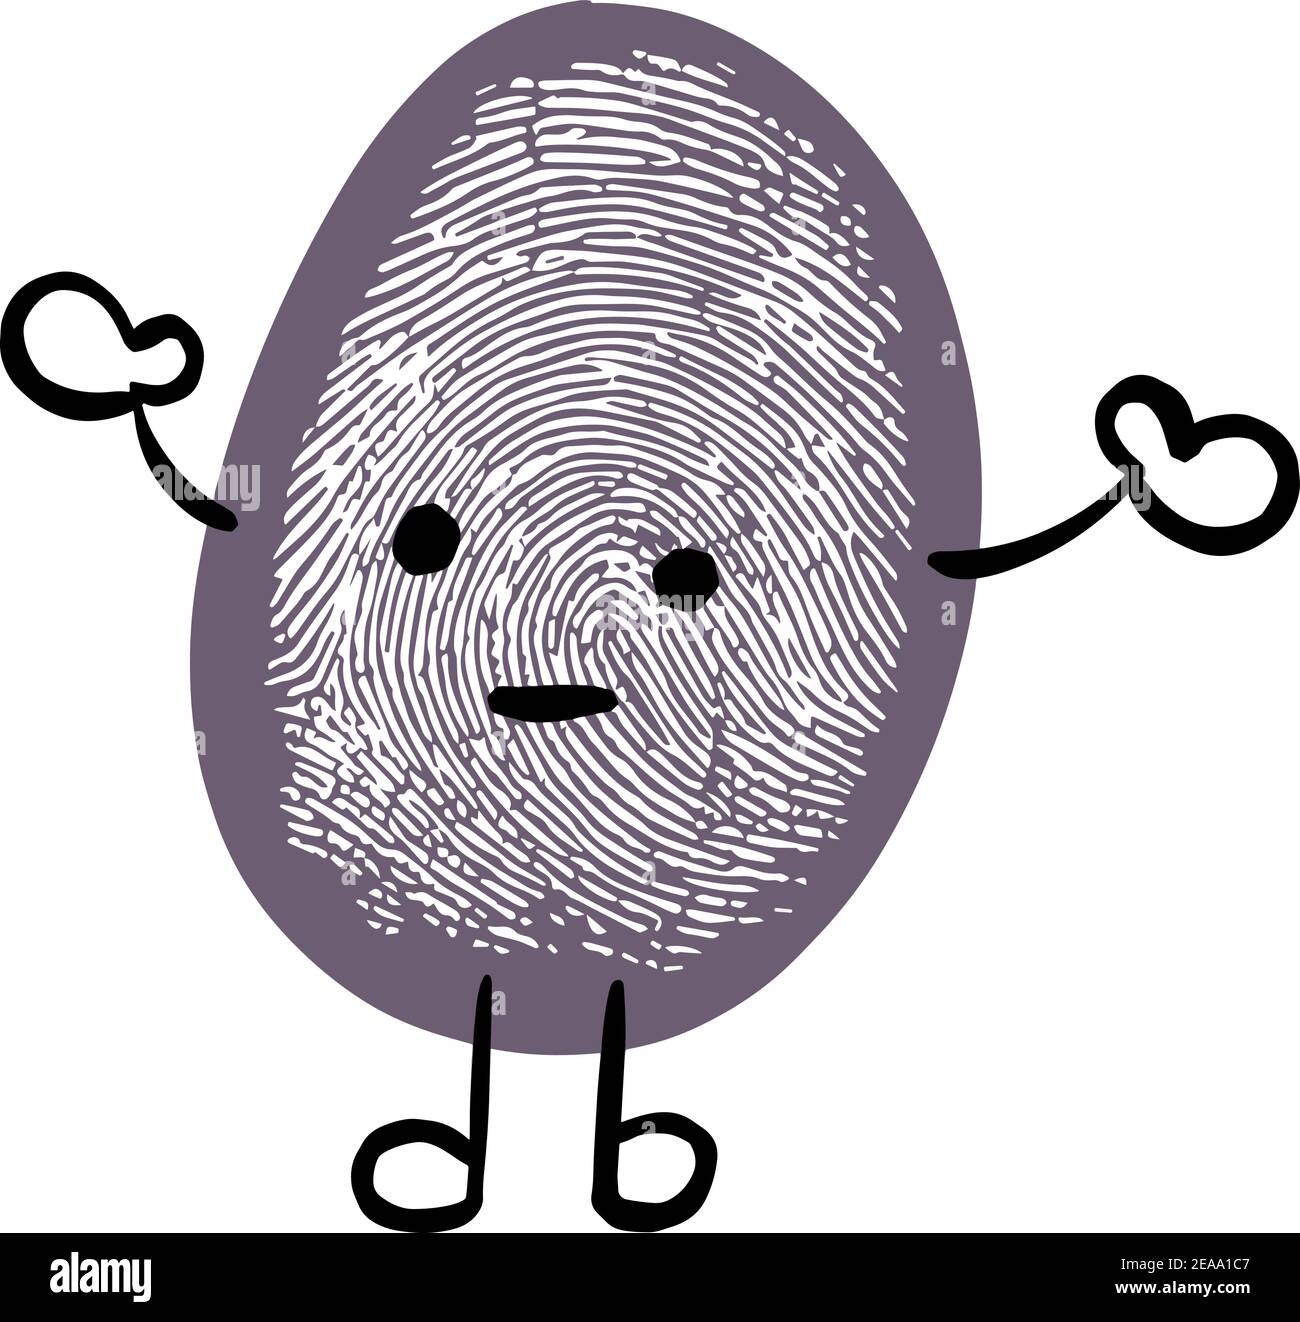 Funny Fingerprint Print Bean Cartoon Character Emoticon Stock Vector Image  & Art - Alamy